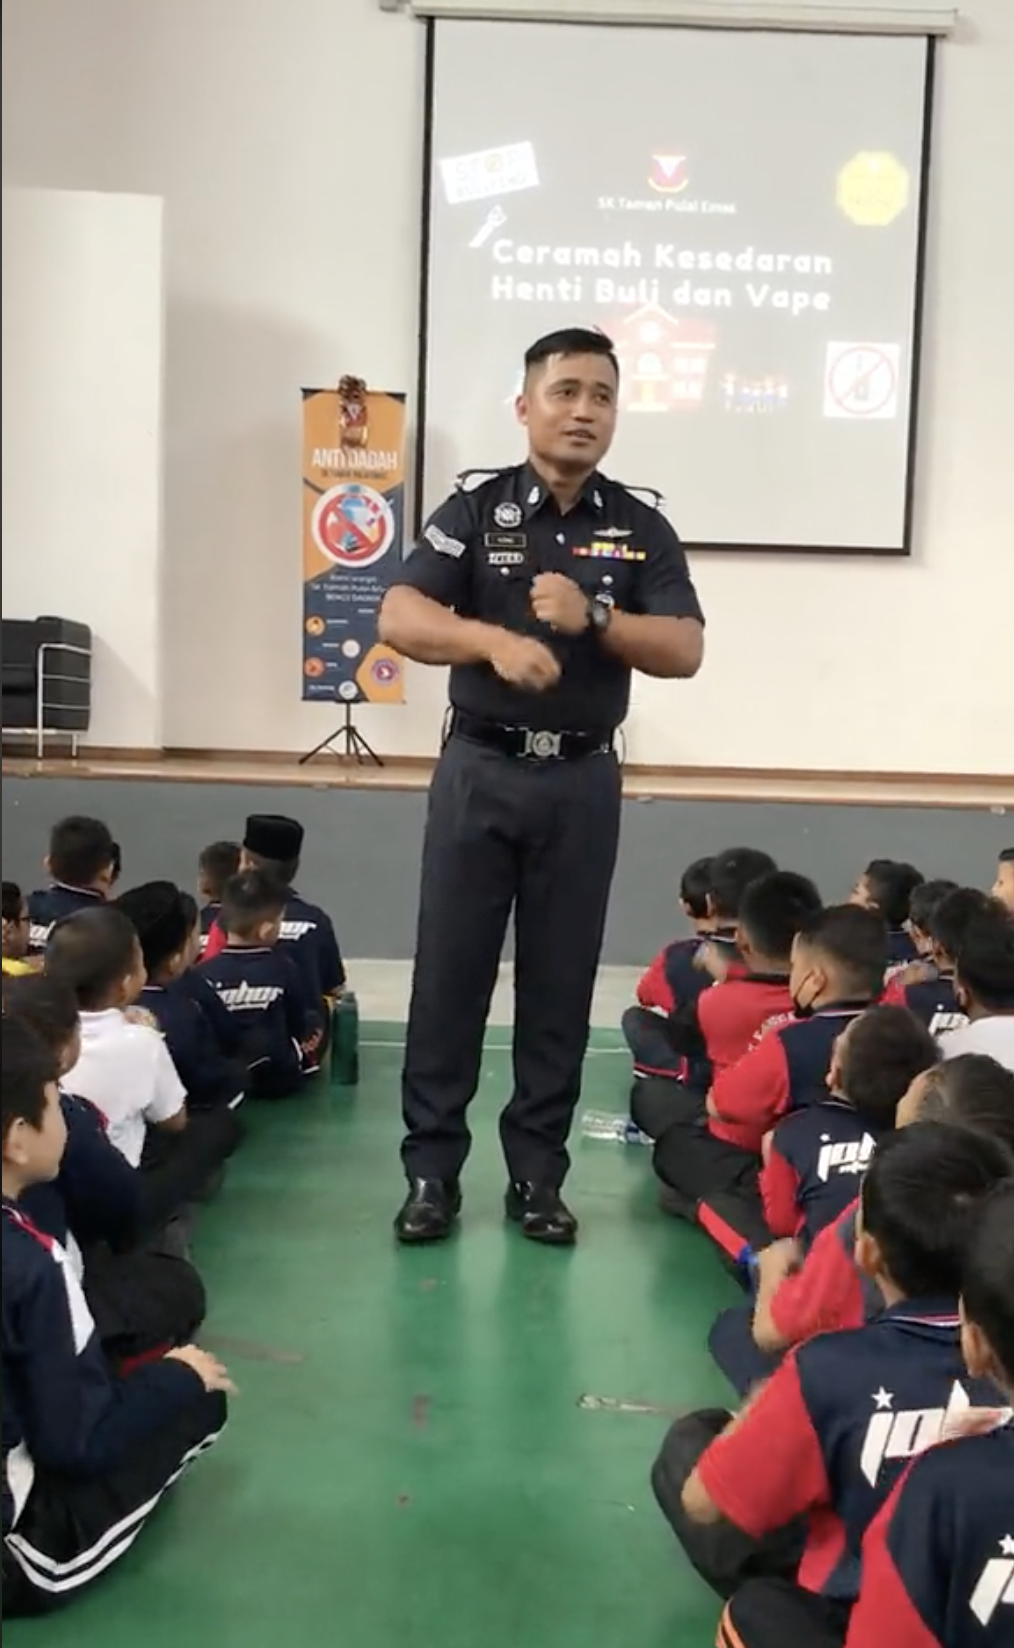 M'sian policeman warms netizens' heart by dancing away with the kids during crime awareness talk | weirdkaya